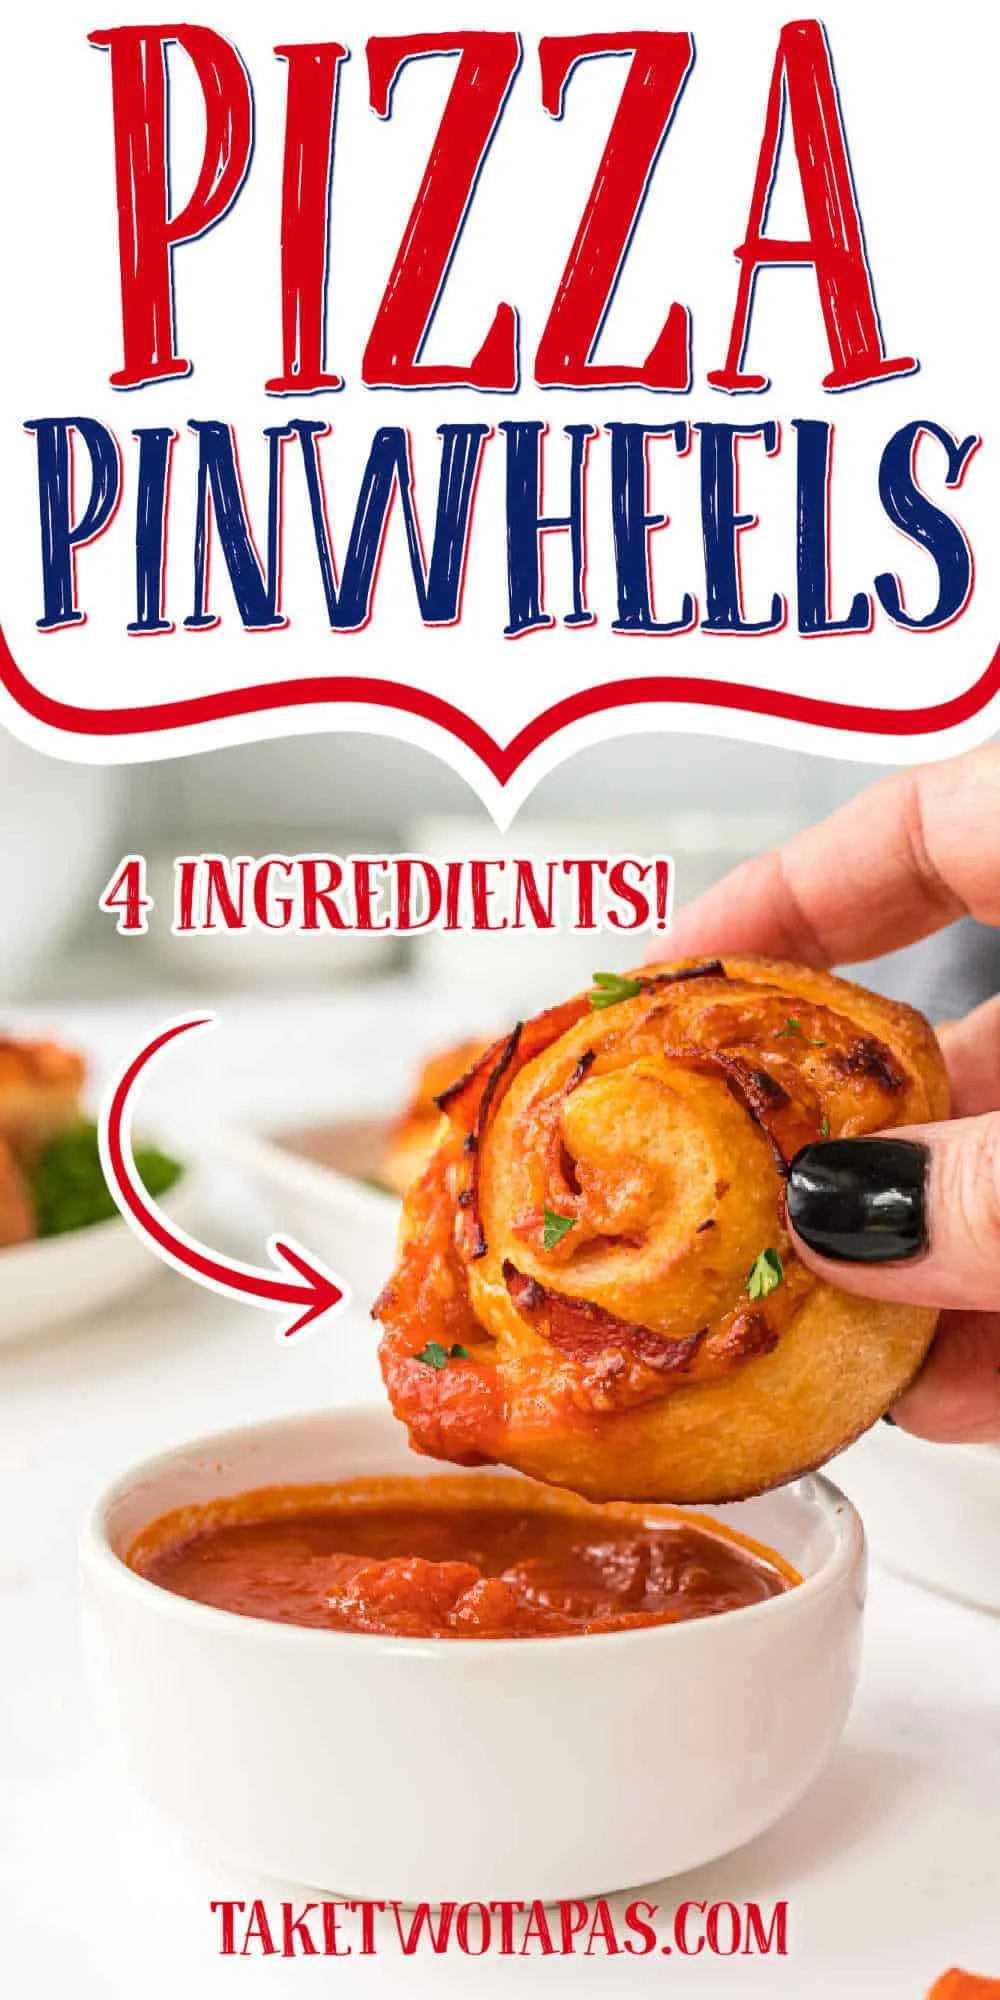 pinwheels with text "pizza pinwheels"